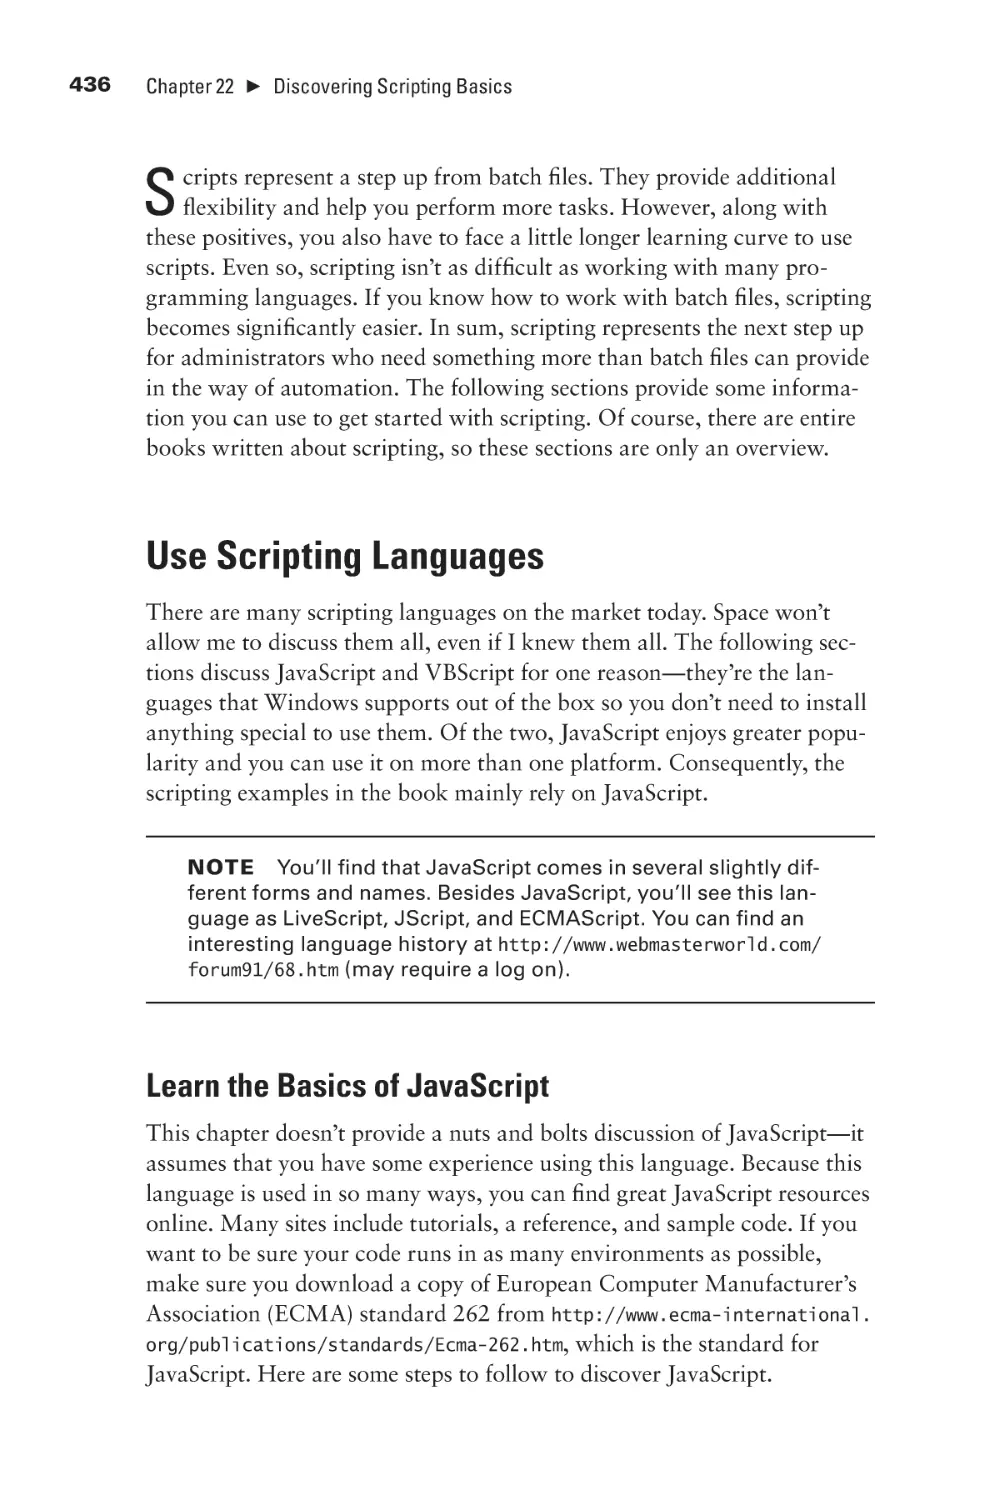 Use Scripting Languages